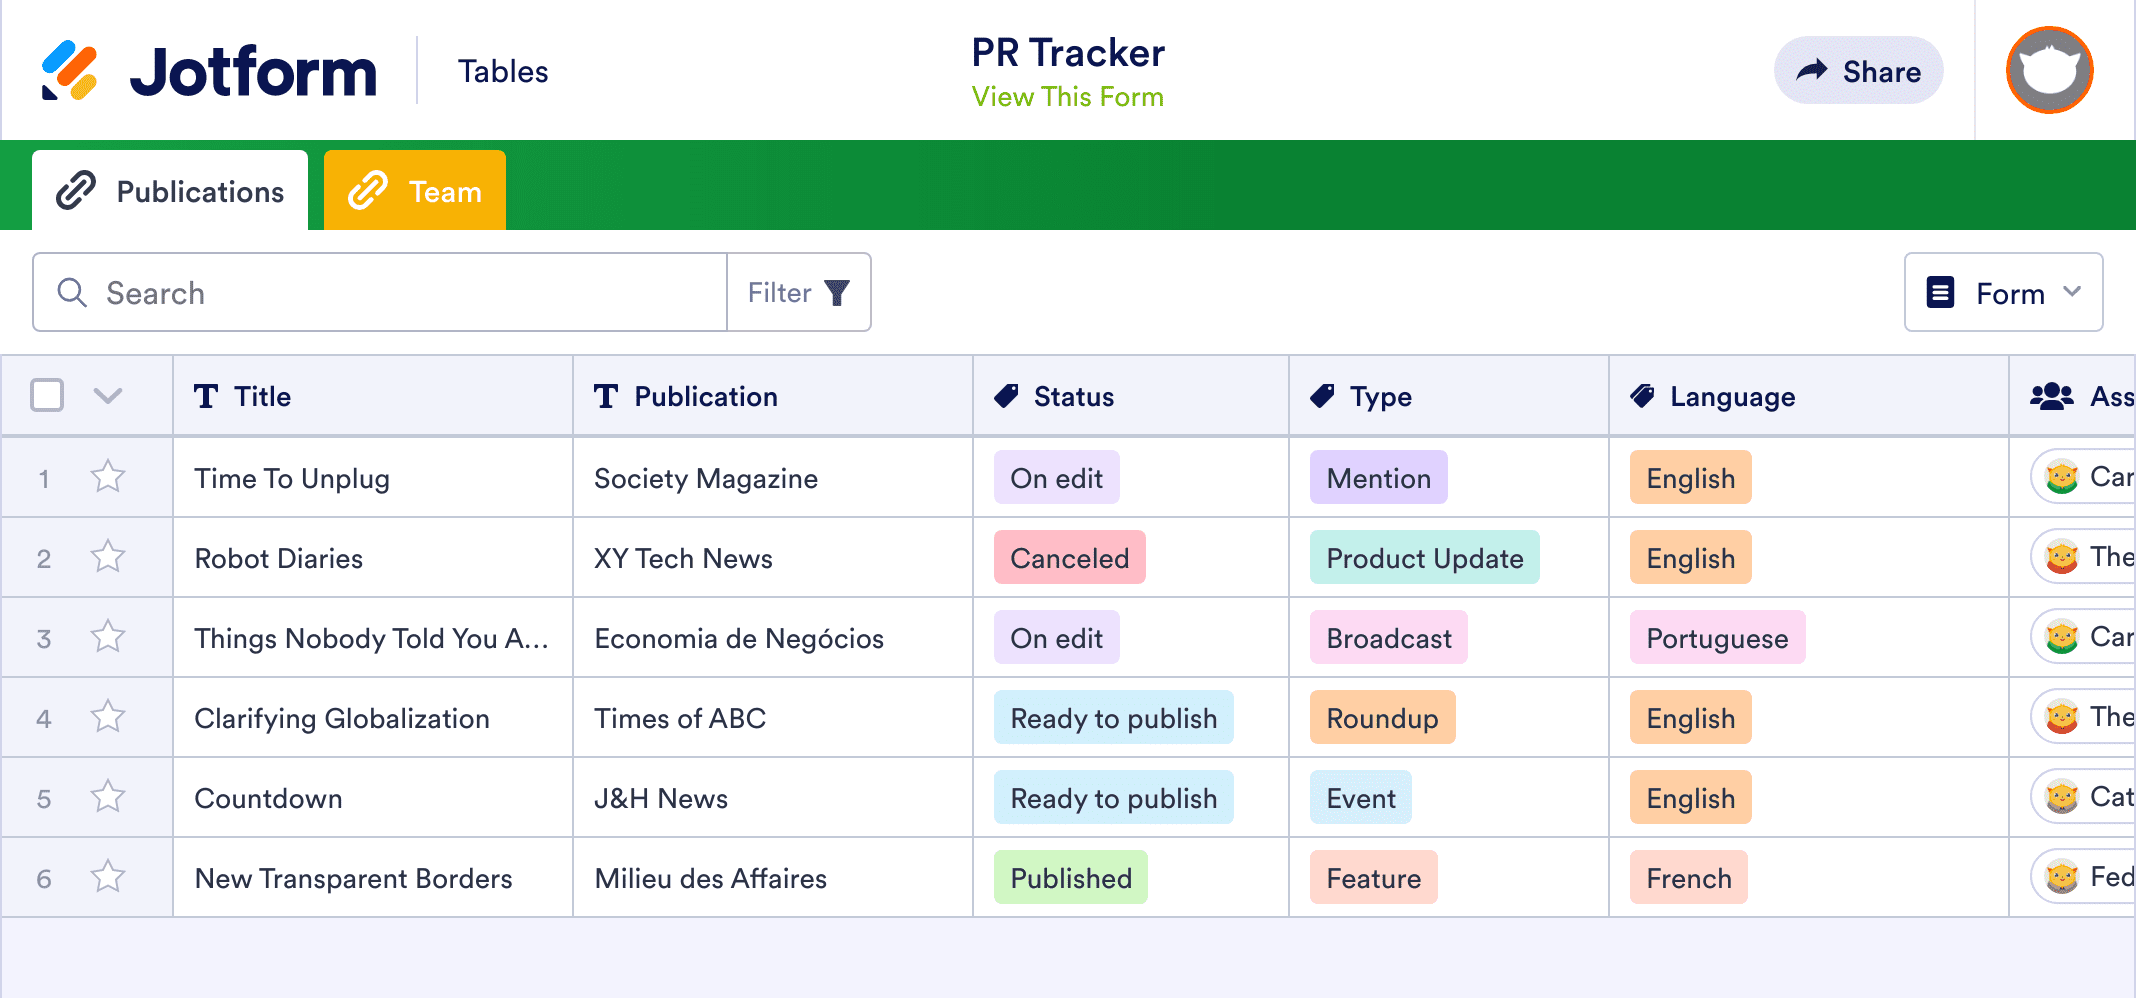 PR Tracker